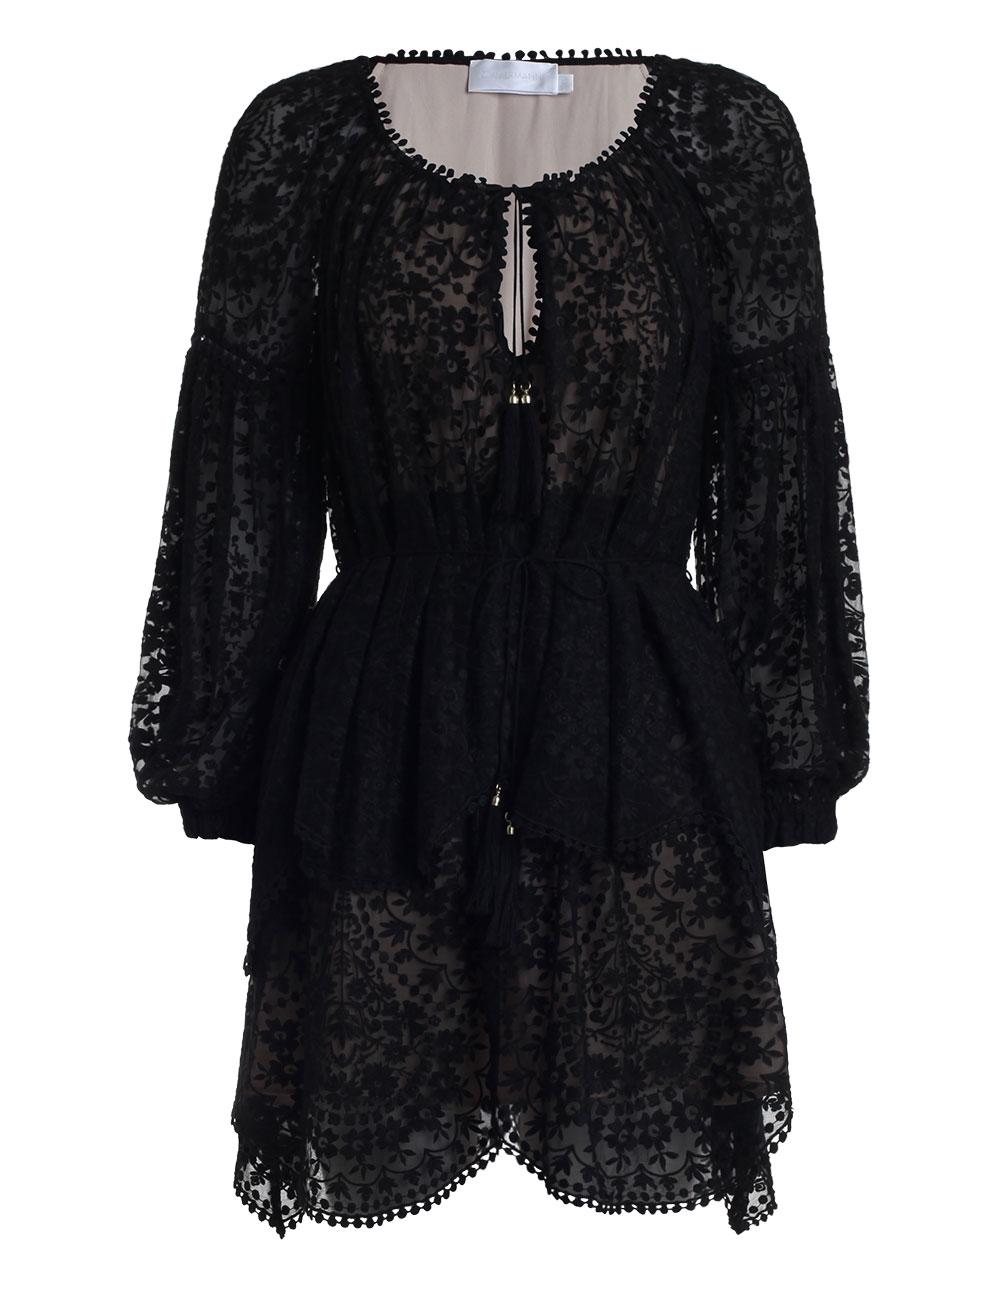 Zimmermann Silk Gossamer Scallop Short Dress in Black - Lyst